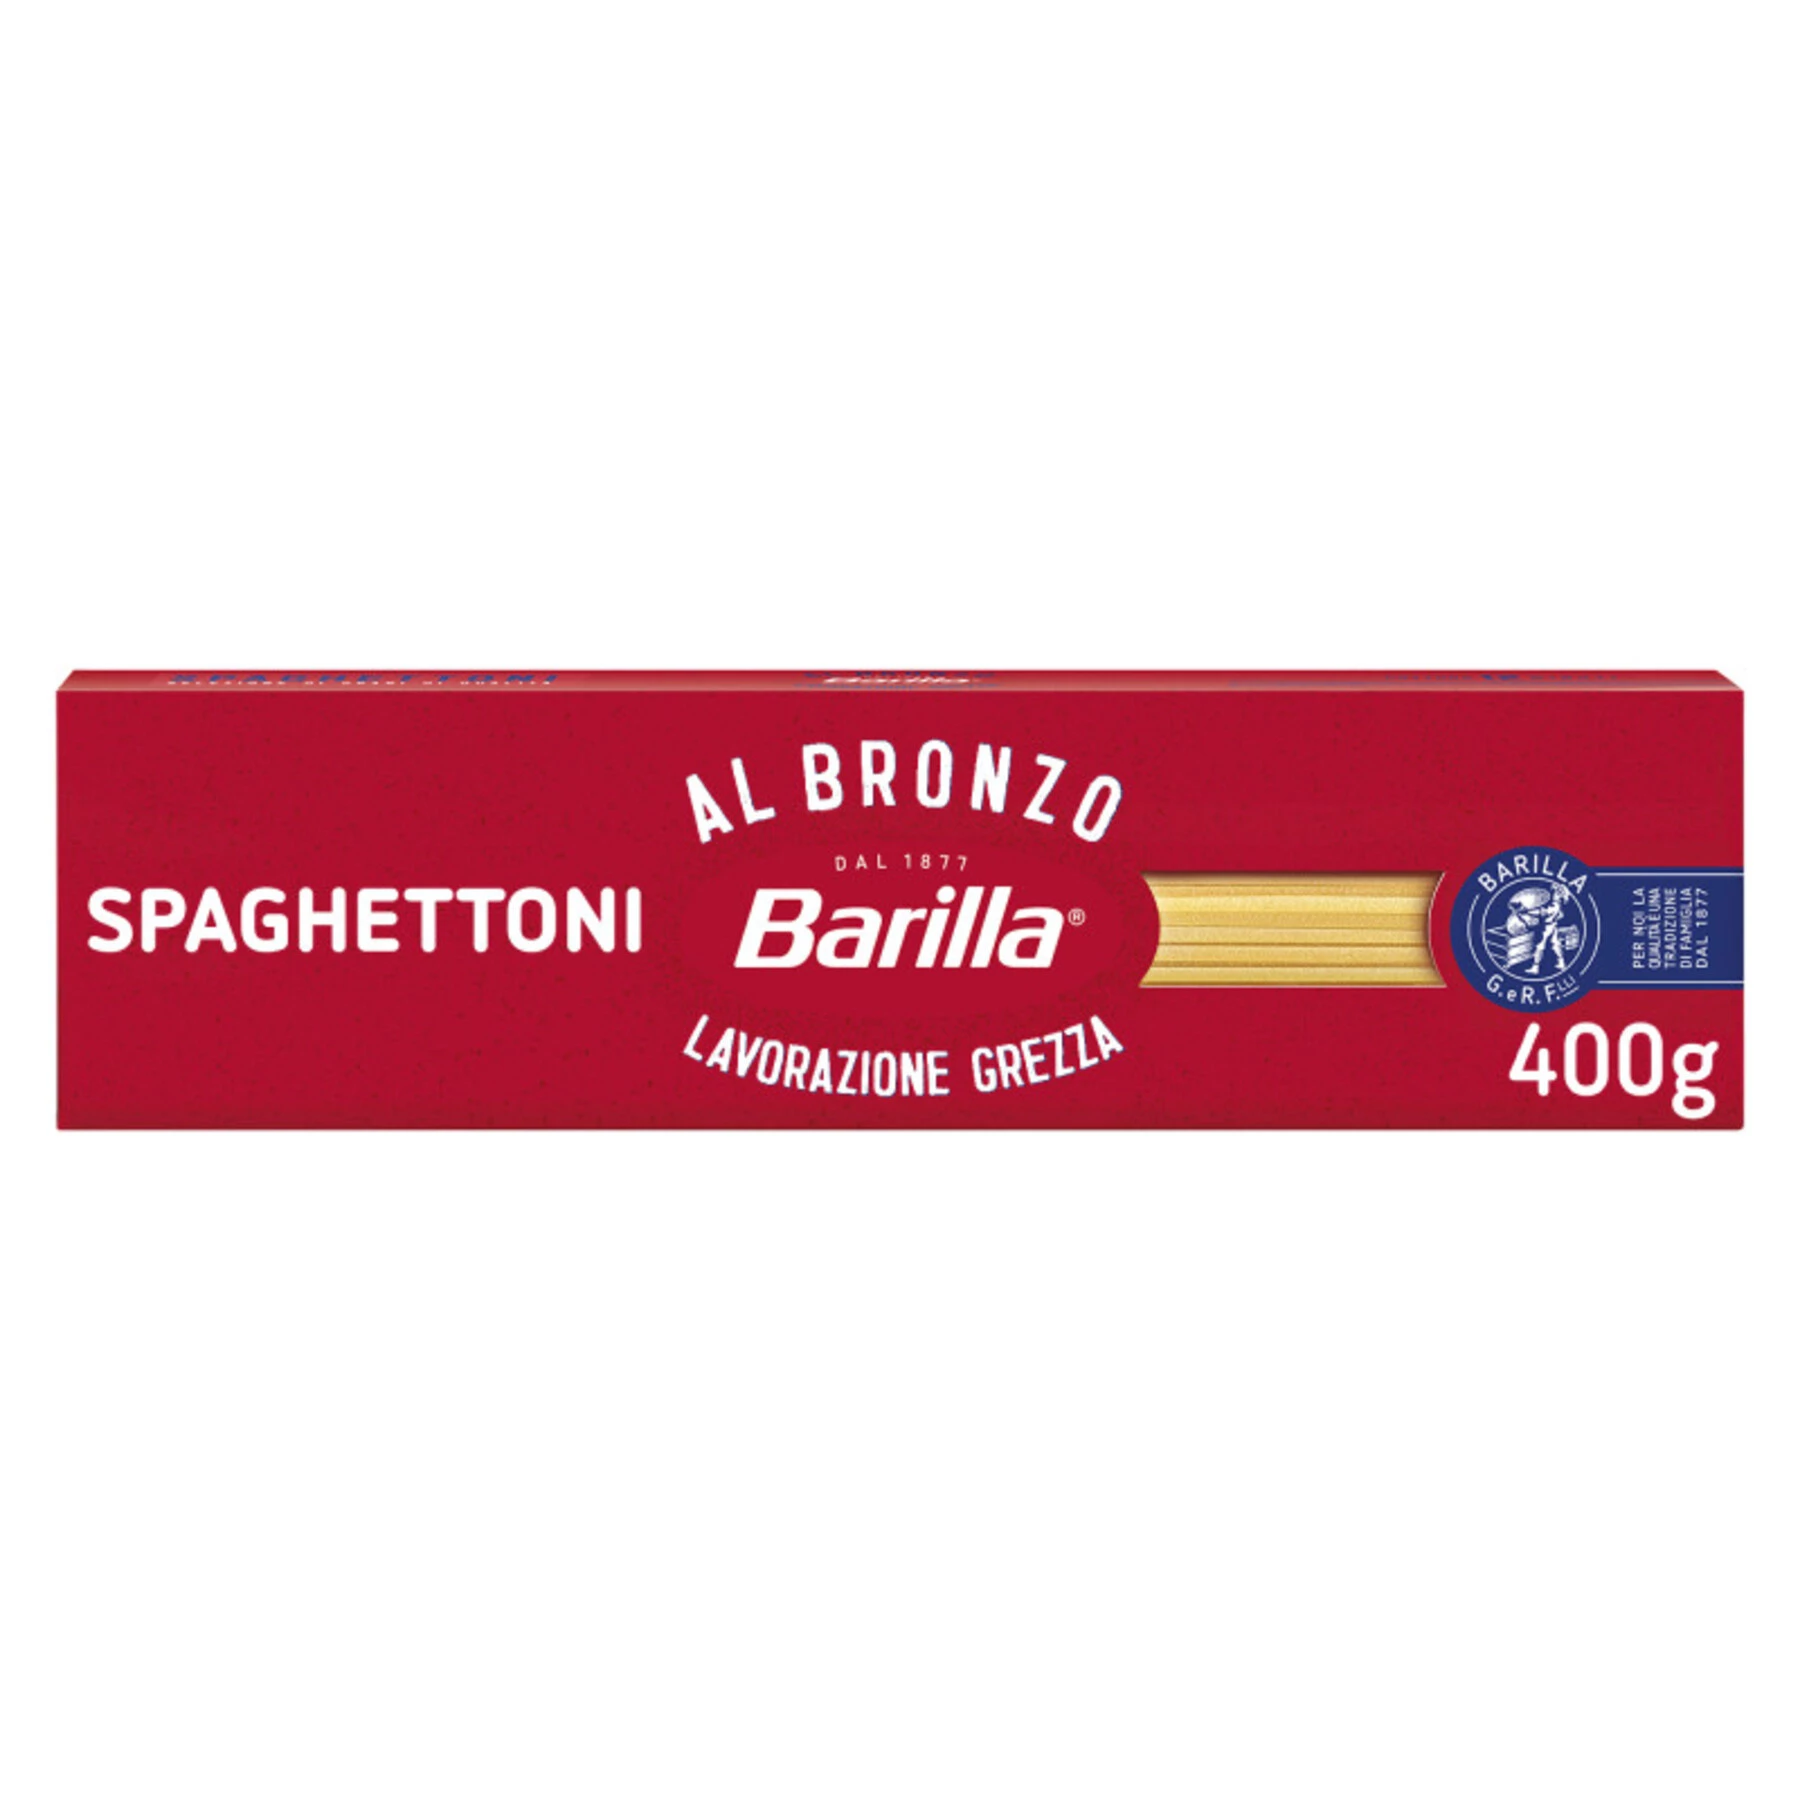 Spaghettipastete aus Bronze 400G - BARILLA